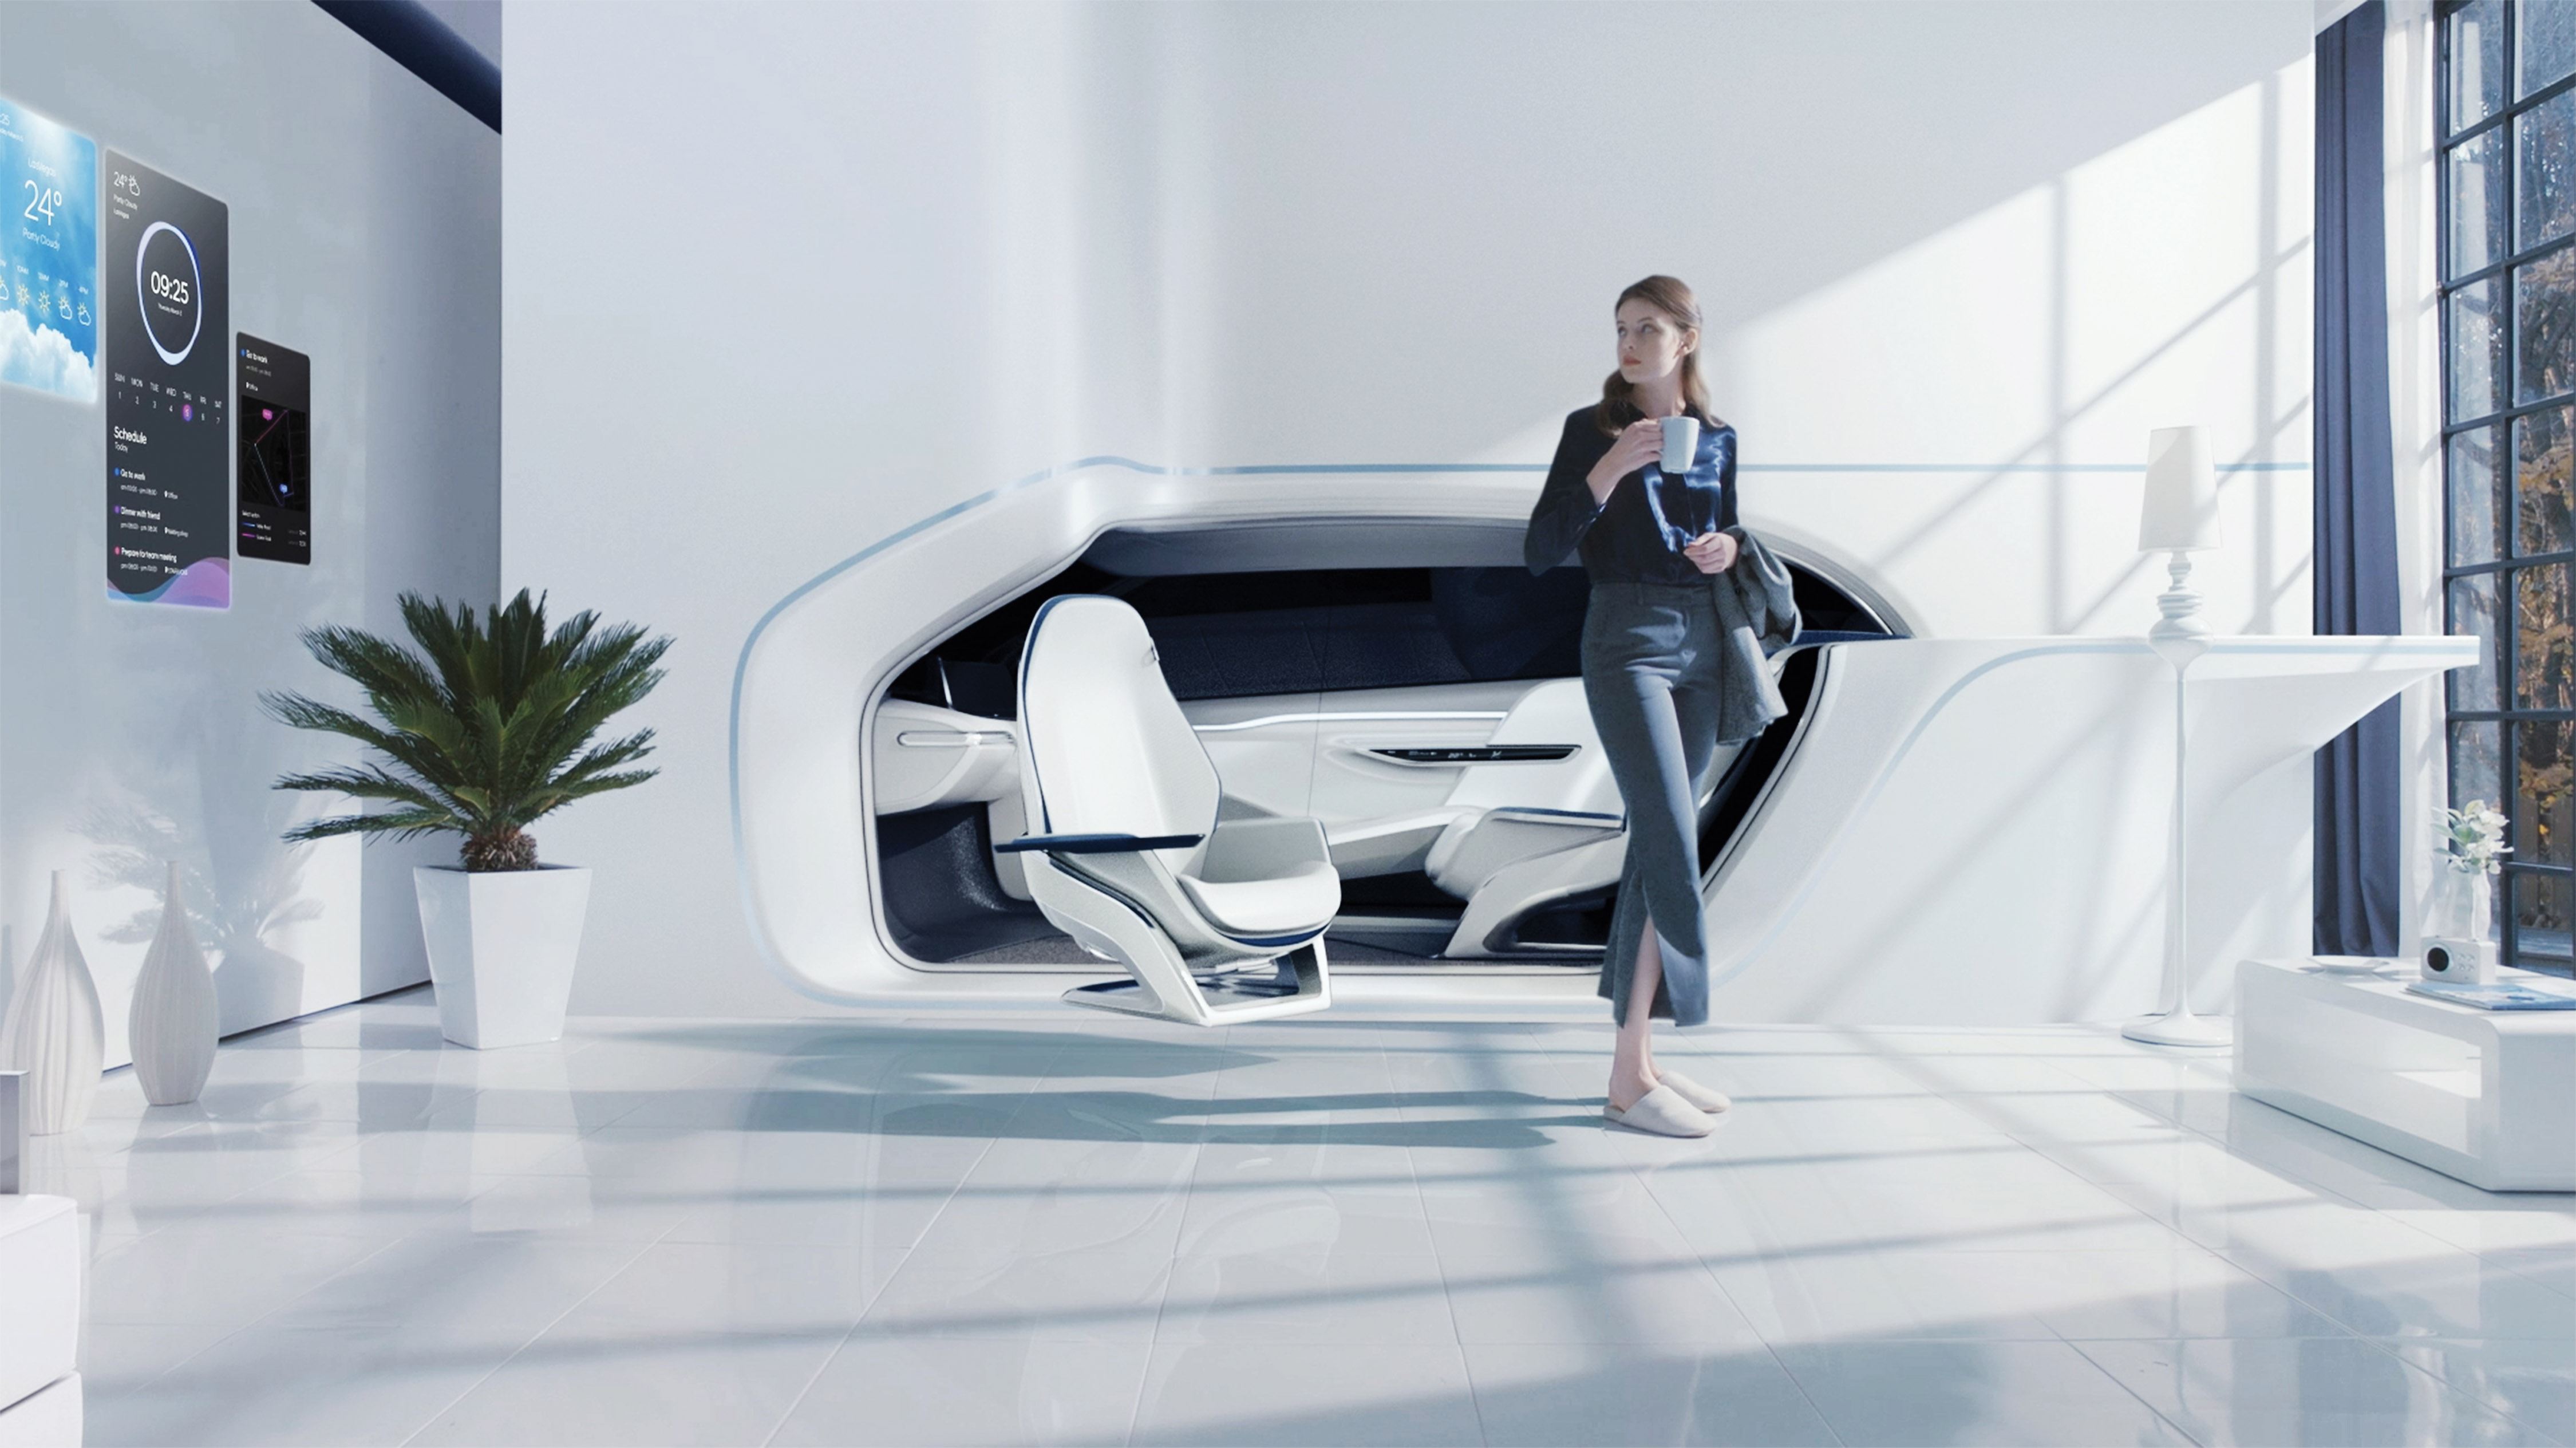 Hyundai toont visie op toekomstige mobiliteit tijdens Consumer Electronics Show 2017 in Las Vegas.